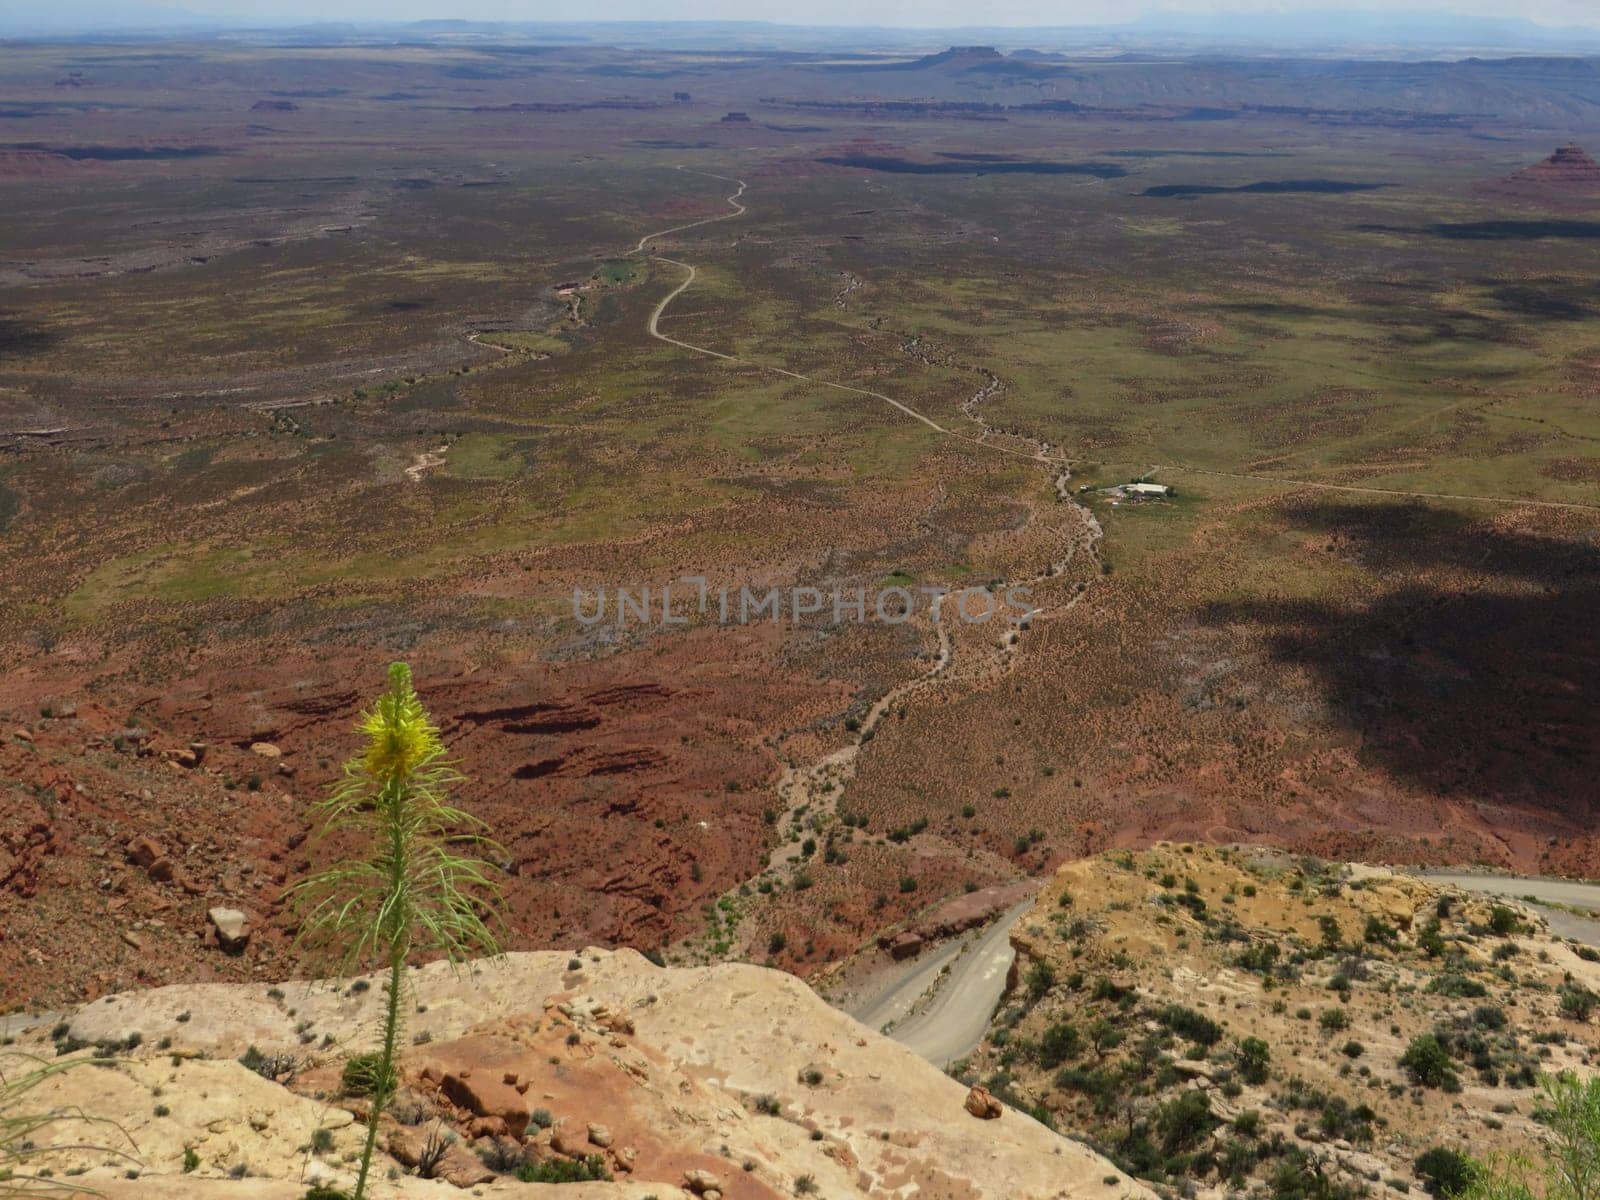 Aerial Desert View, Landscape from Moki Dugway Overlook in Utah, Highway 261. High quality photo